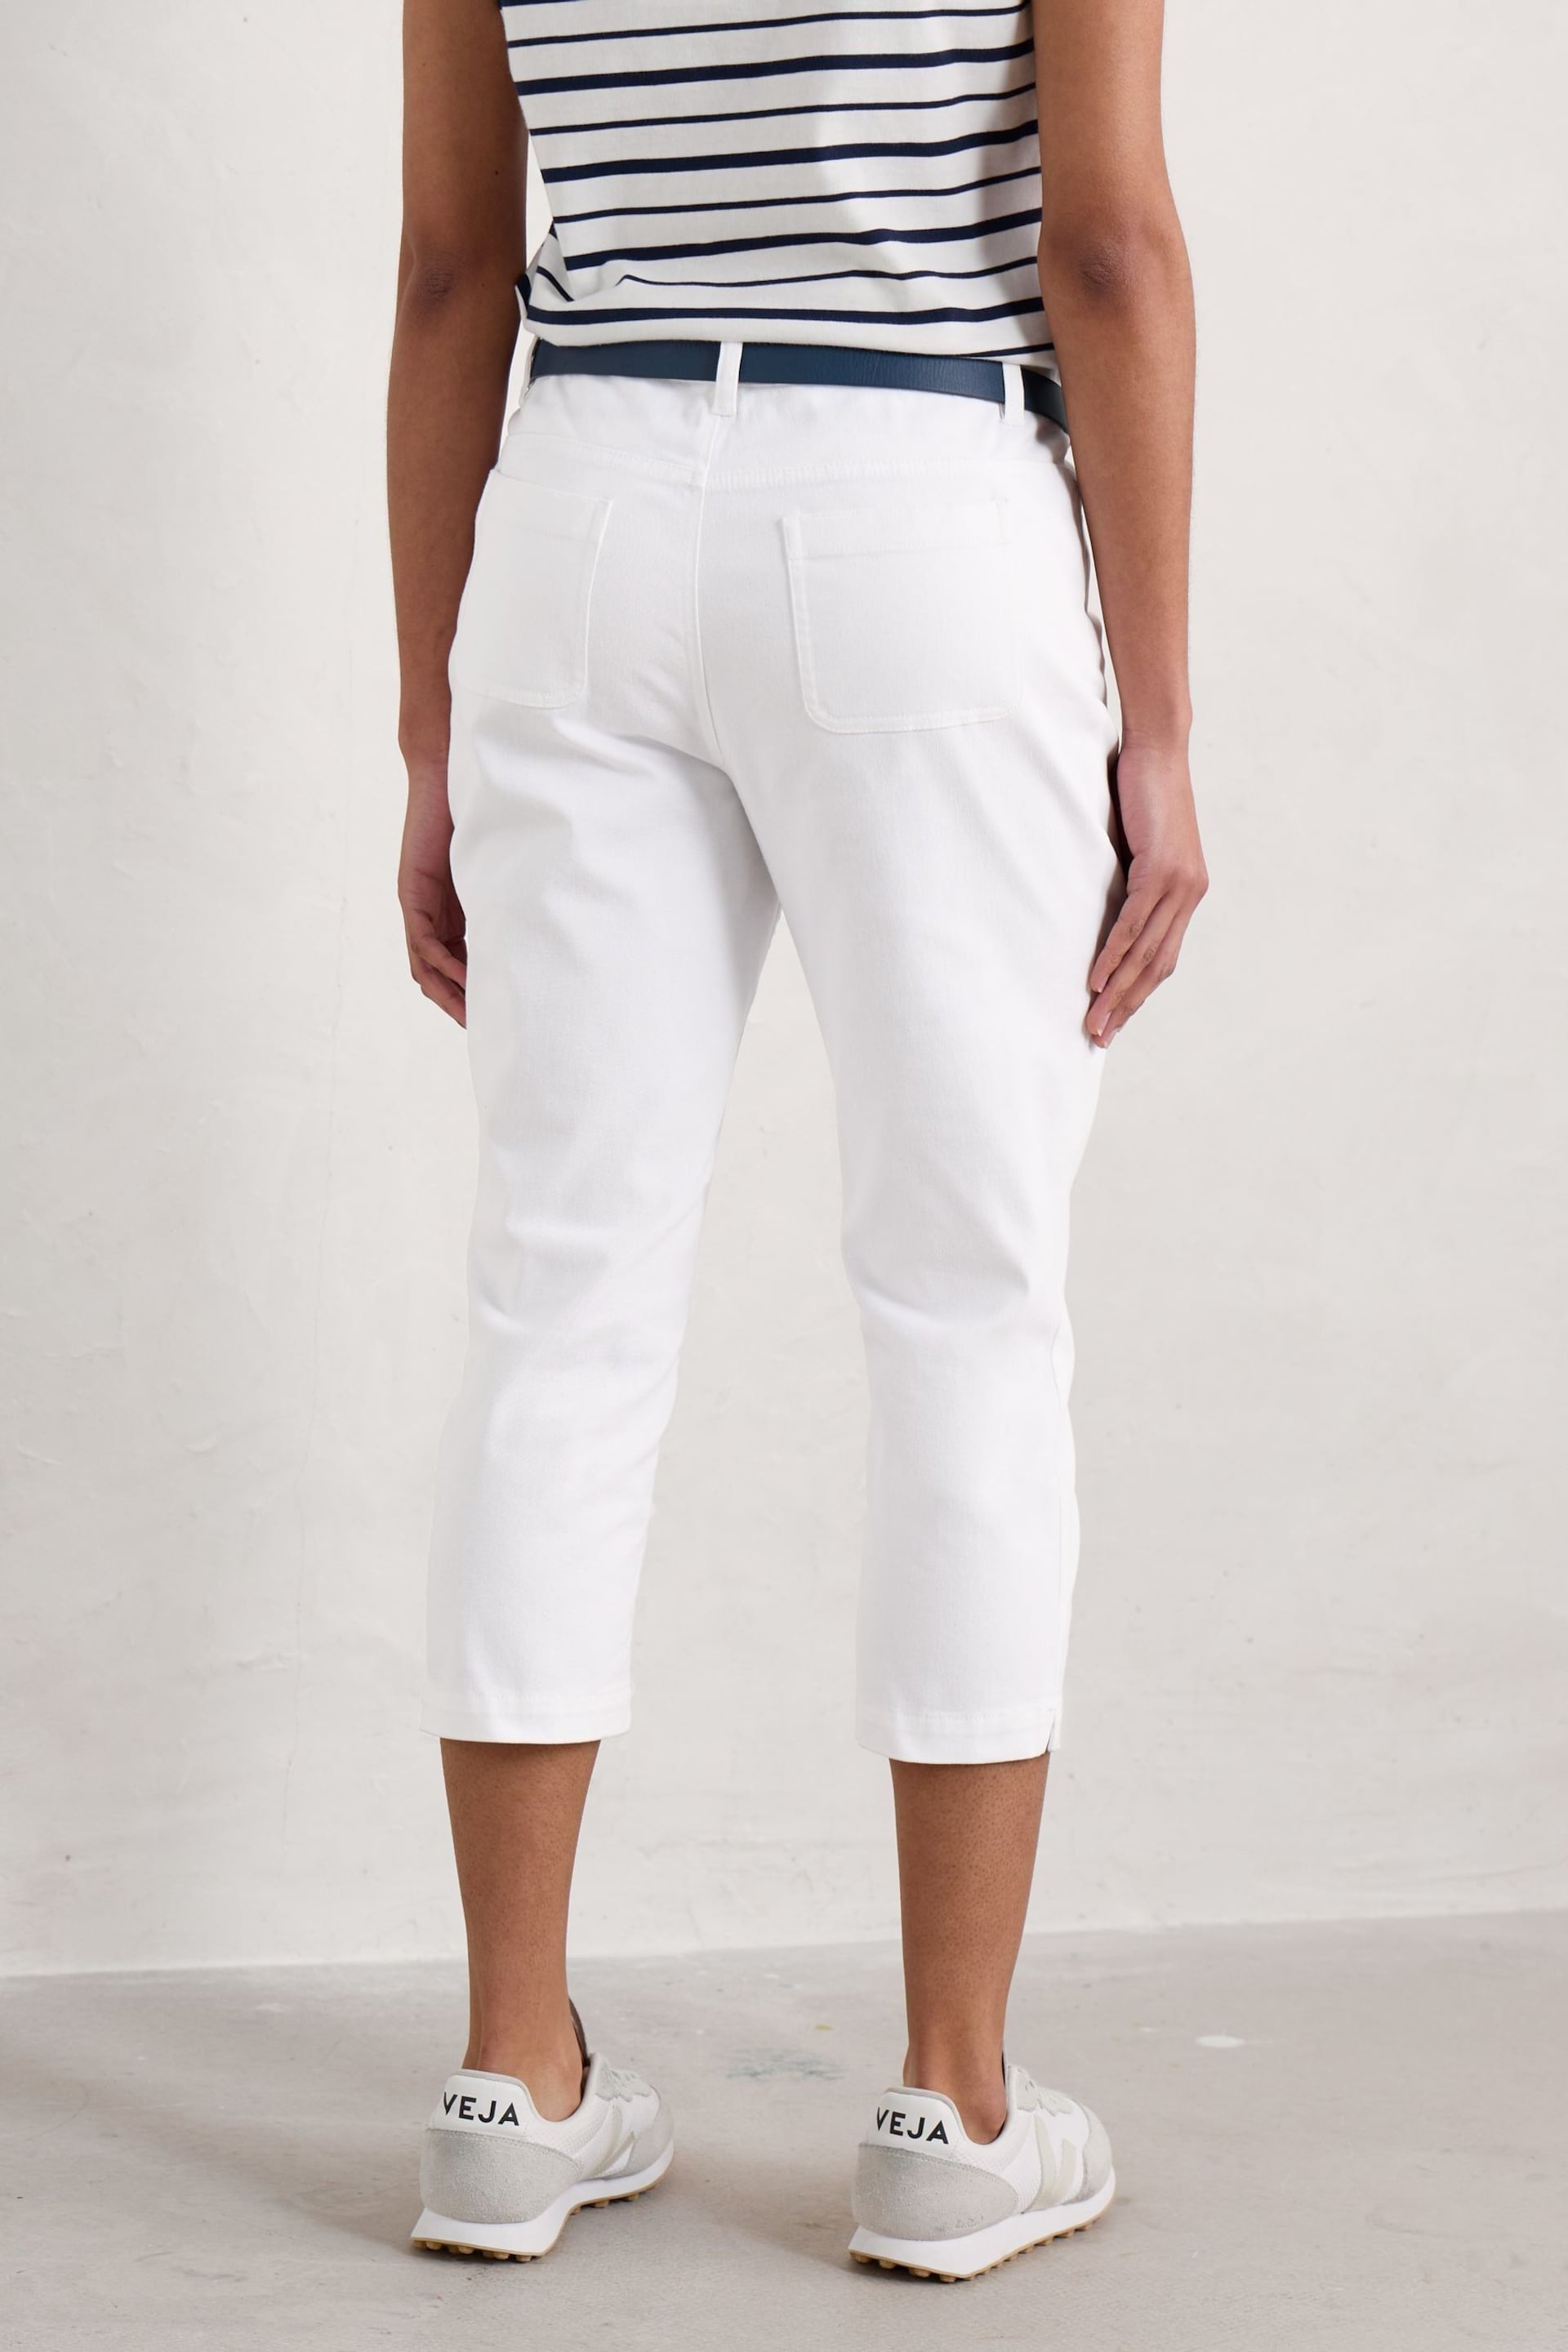 Seasalt Cornwall White Albert Quay Slim Fit Trousers - Image 2 of 5